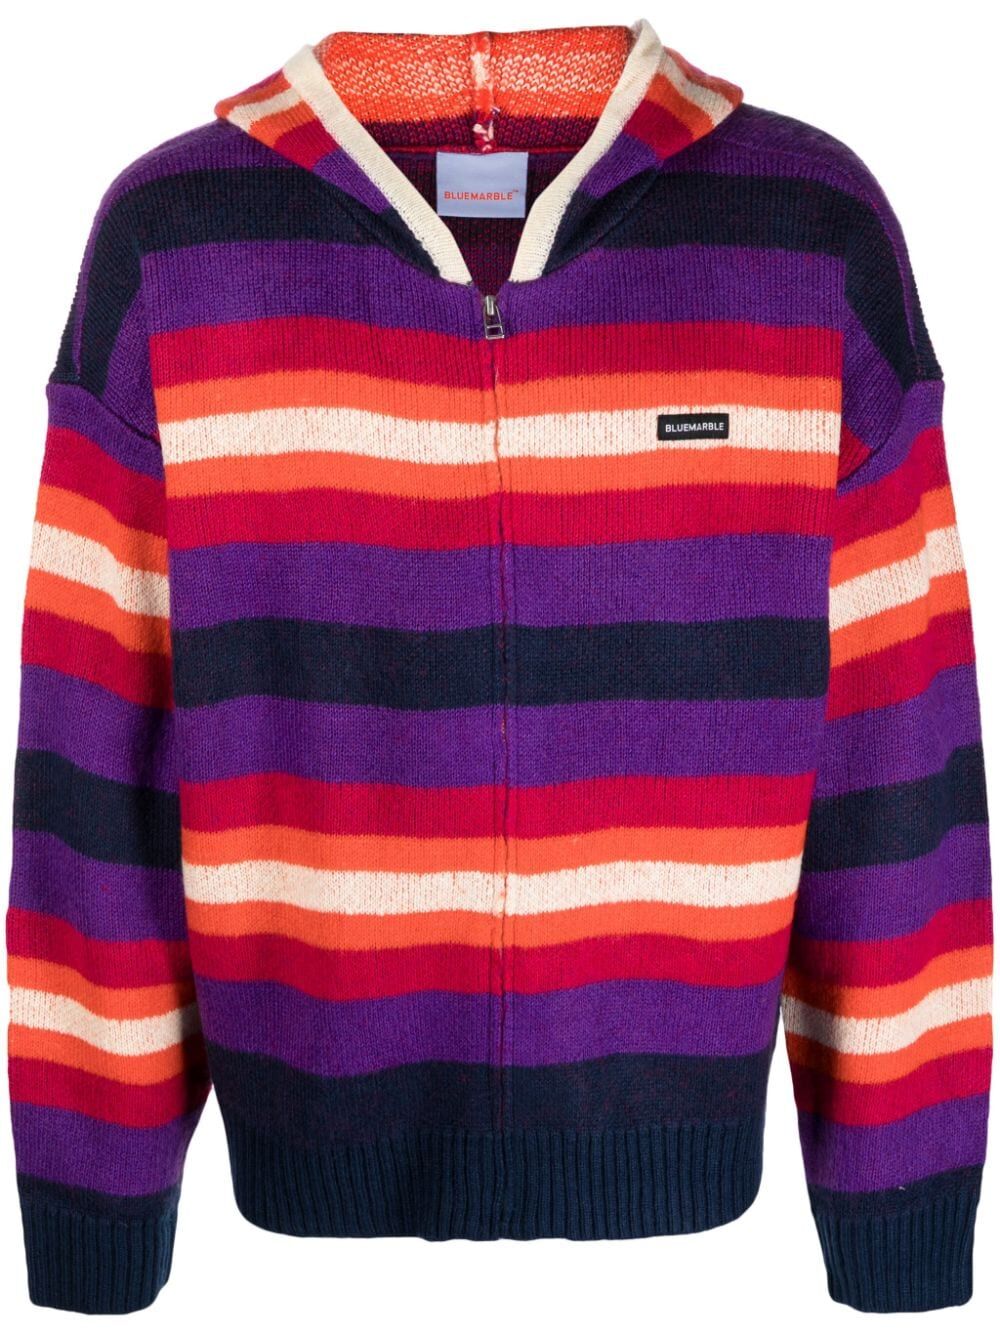 BLUEMARBLE-Zipped knitted hoodie-HO13 KN19B23 MLTS